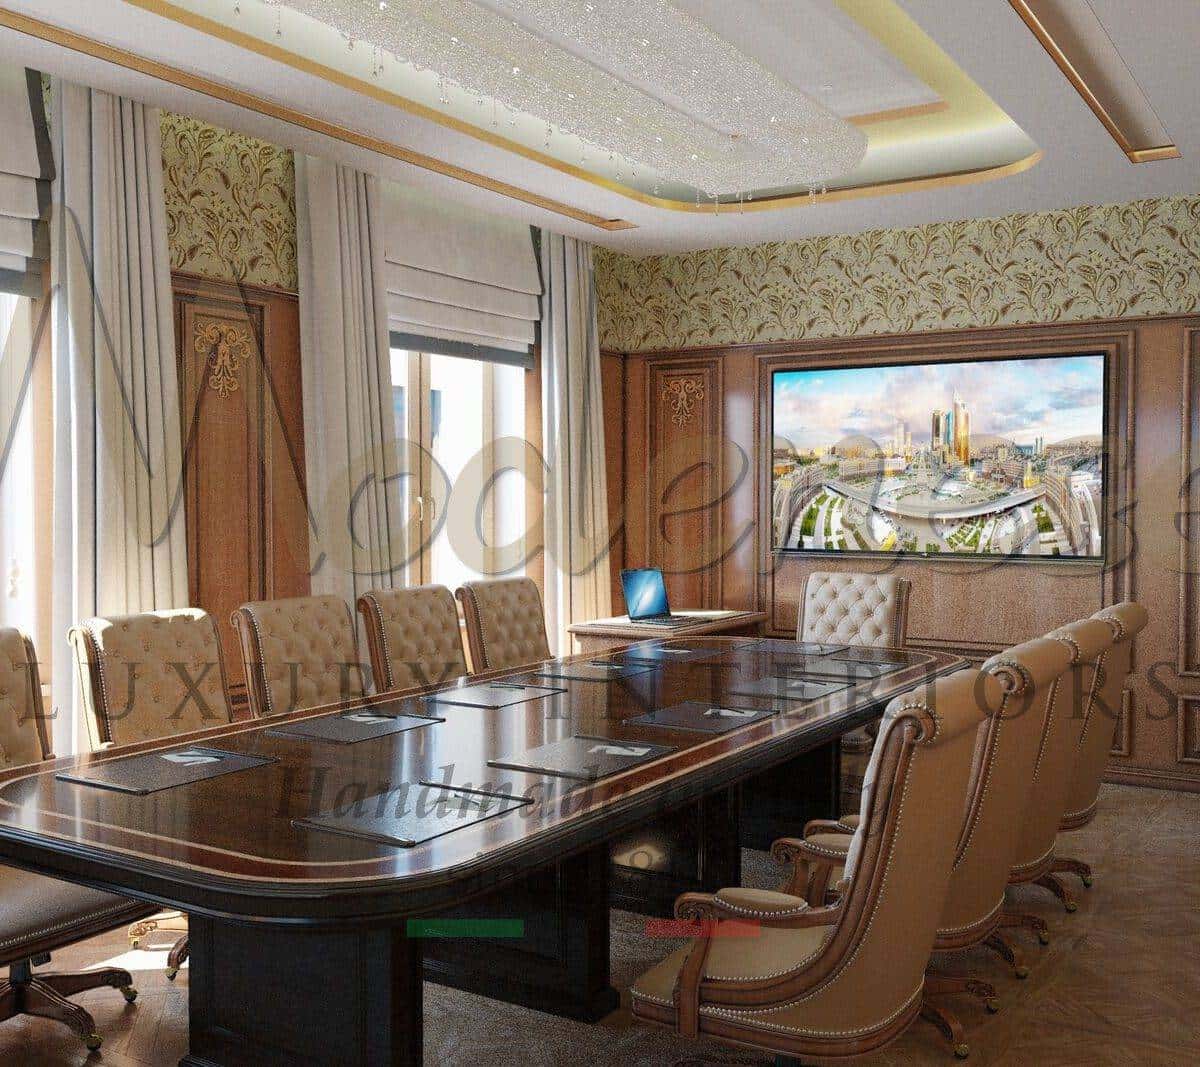 Meeting Rooms ⋆ Luxury Italian Classic Furniture